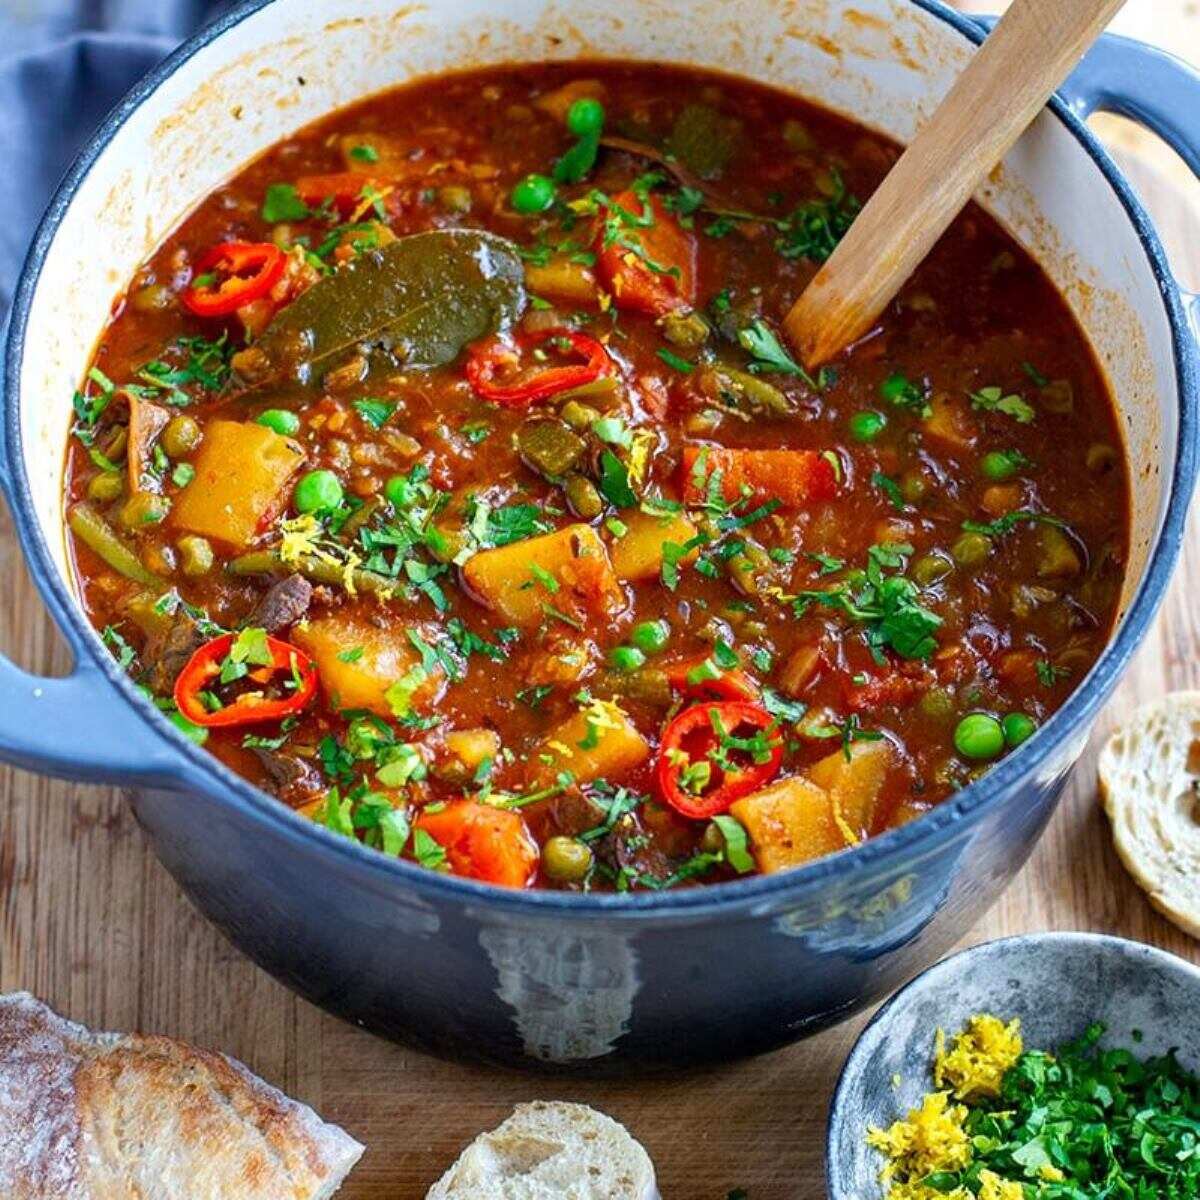 https://instantpoteats.com/wp-content/uploads/2020/01/instant-pot-vegetable-stew-f.jpg